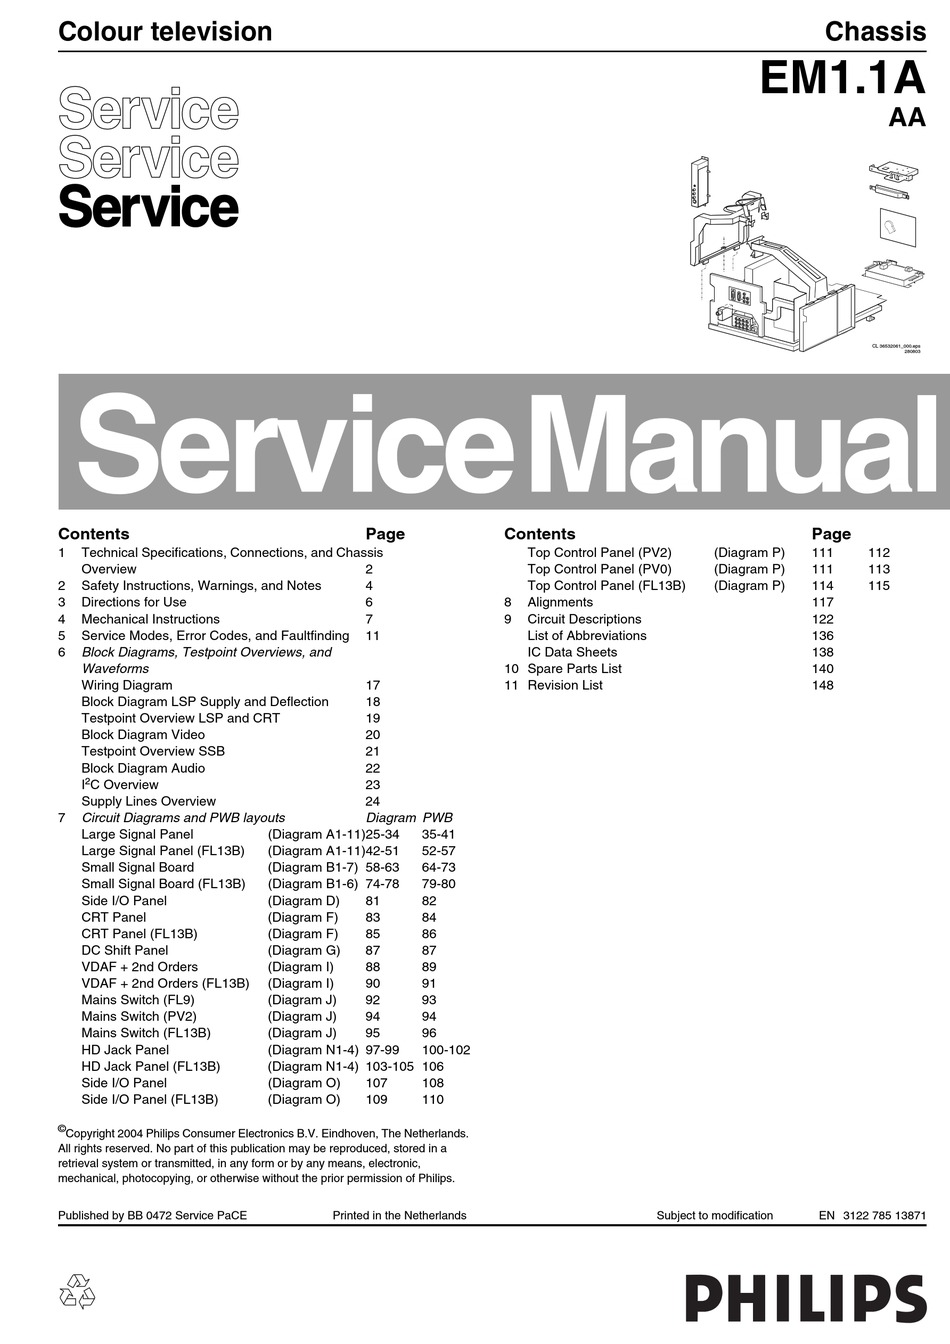 PHILIPS EM1.1A SERVICE MANUAL Pdf Download | ManualsLib